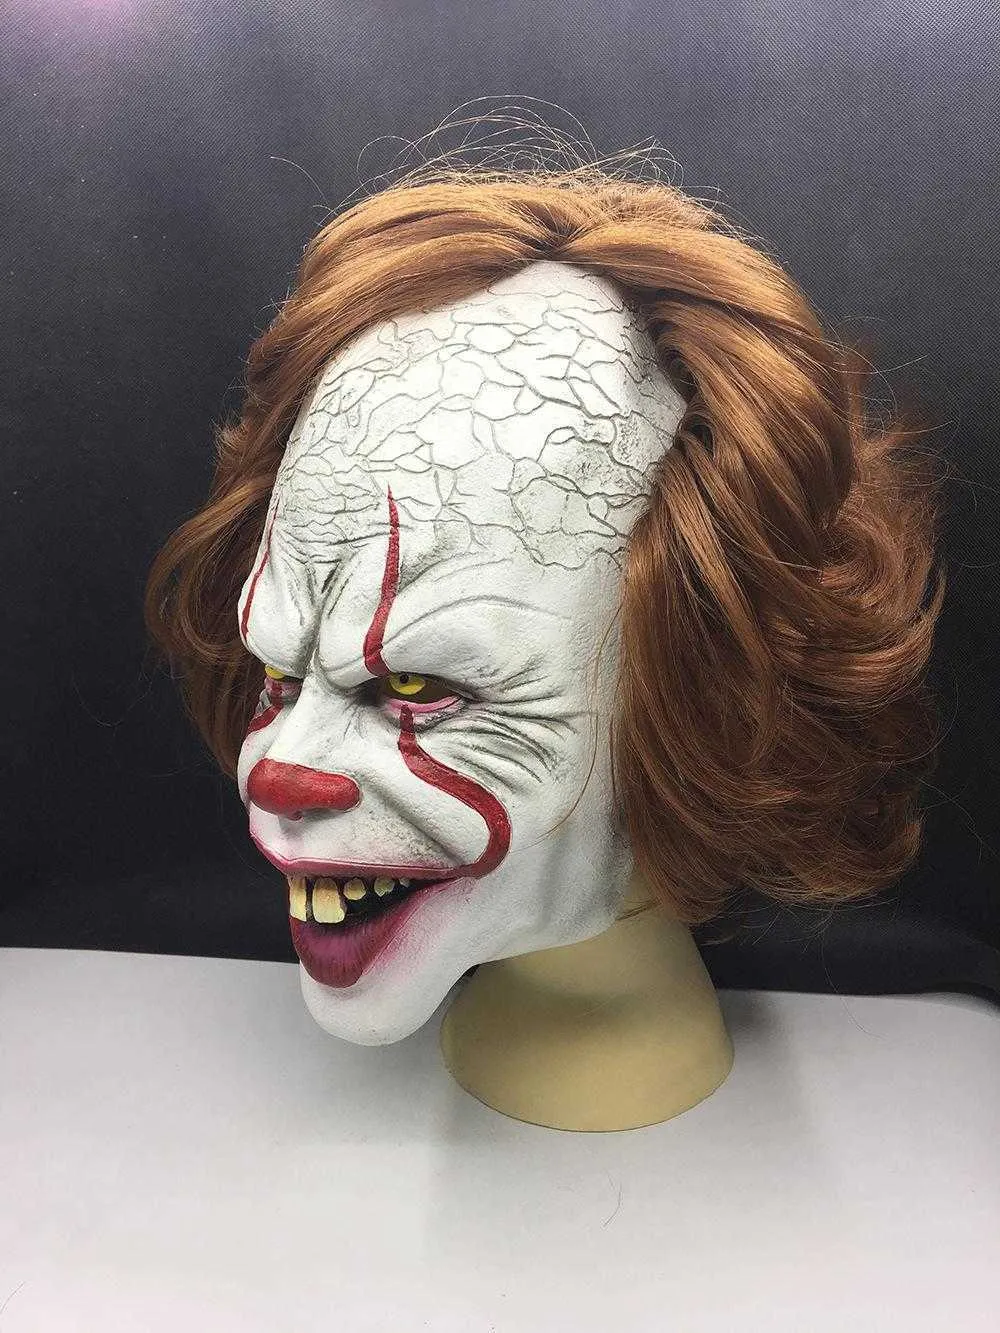 Stephen King's Clown Mask Full Face Horror Joker Mask Latex Masks Clown Mask Halloween Cosplay Costume Props Party Masks DBC VT0944